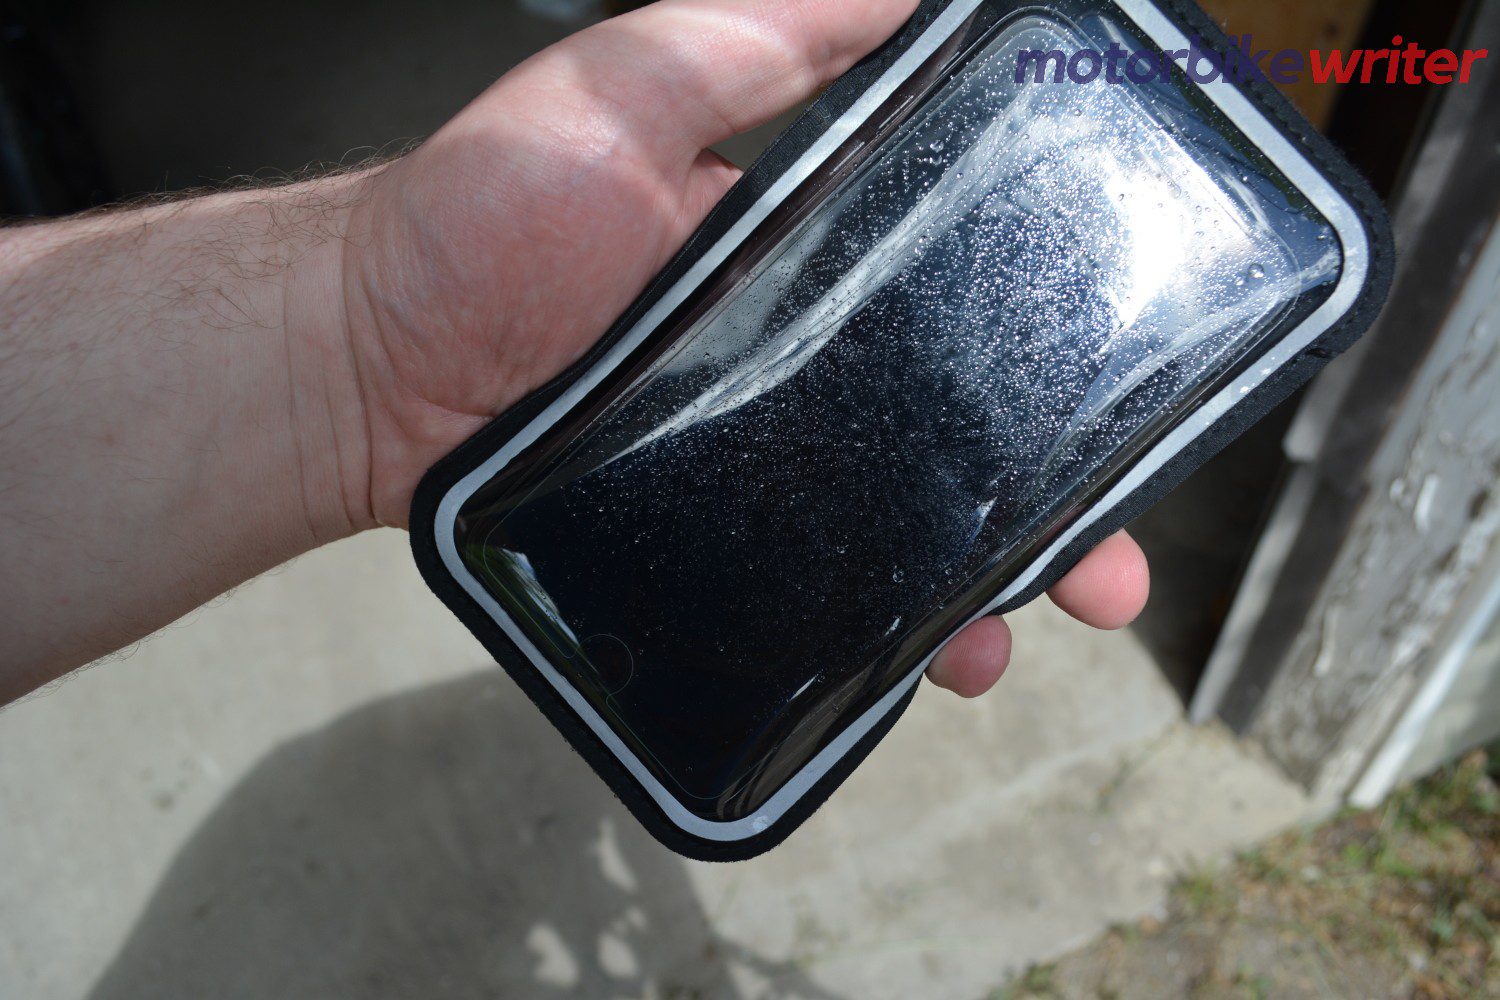 Phone inside plastic Shapeheart sleeve